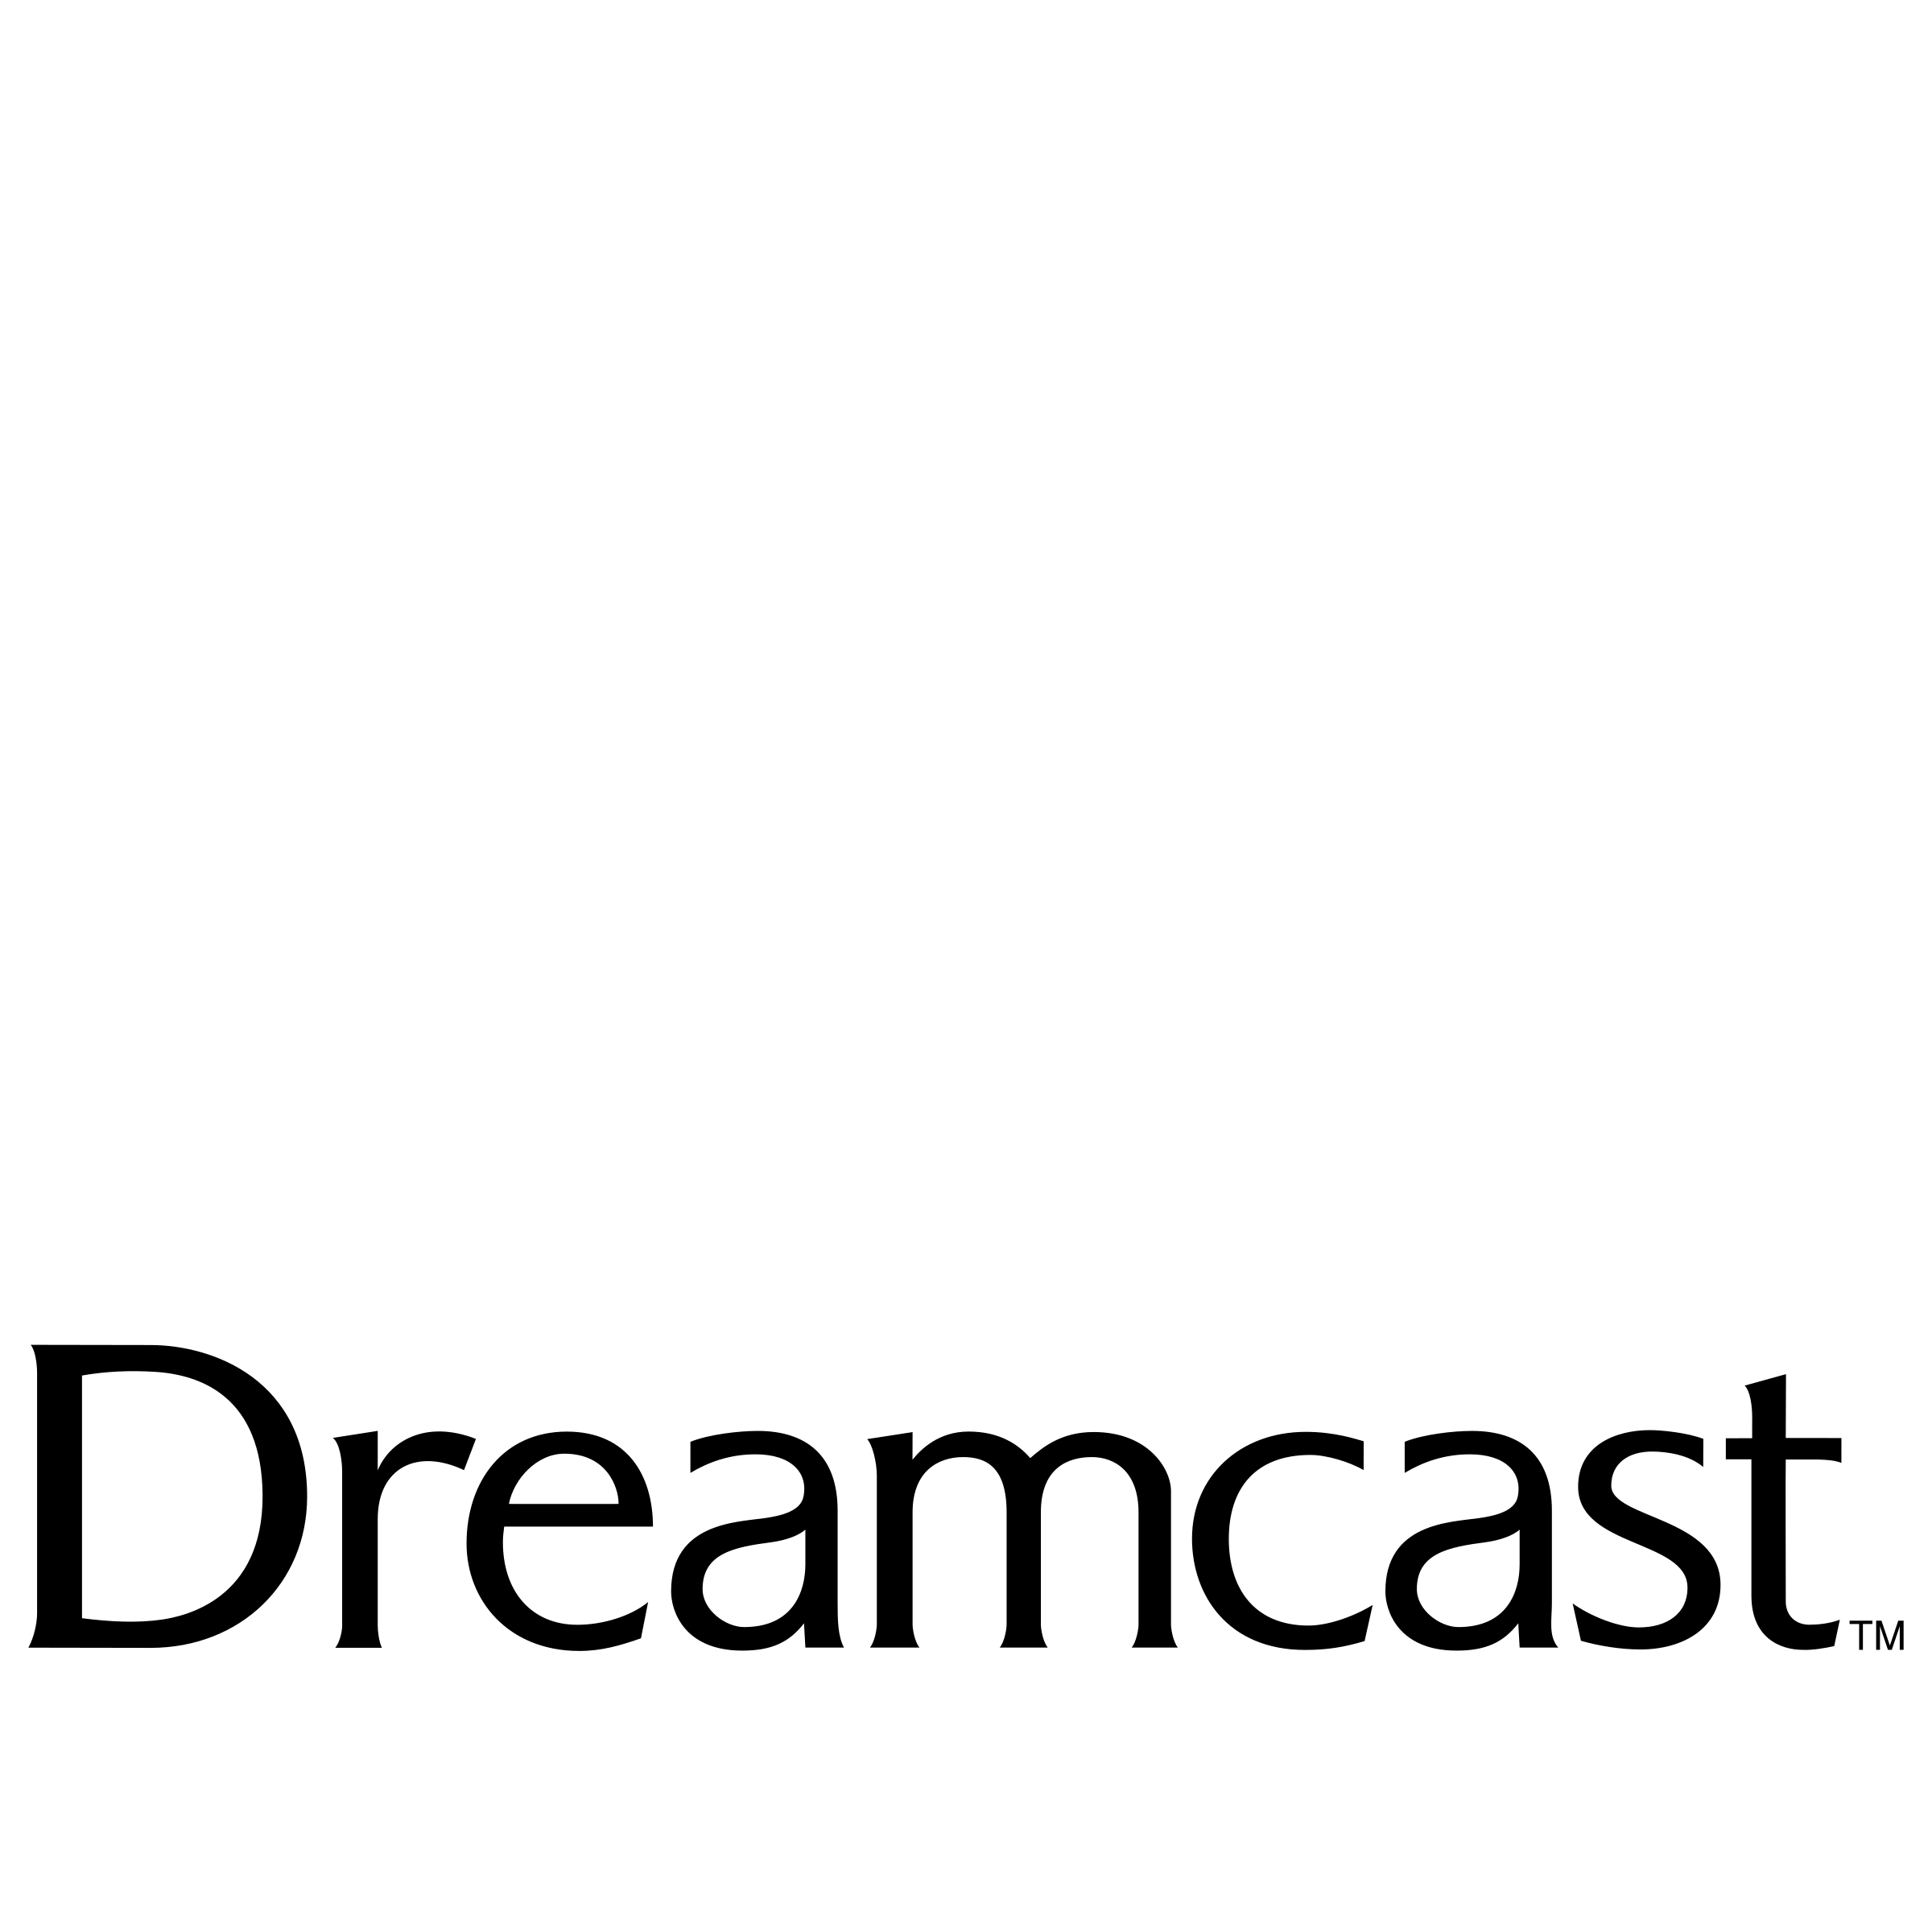 Dreamcast Logo - Dreamcast Logo PNG Transparent & SVG Vector - Freebie Supply